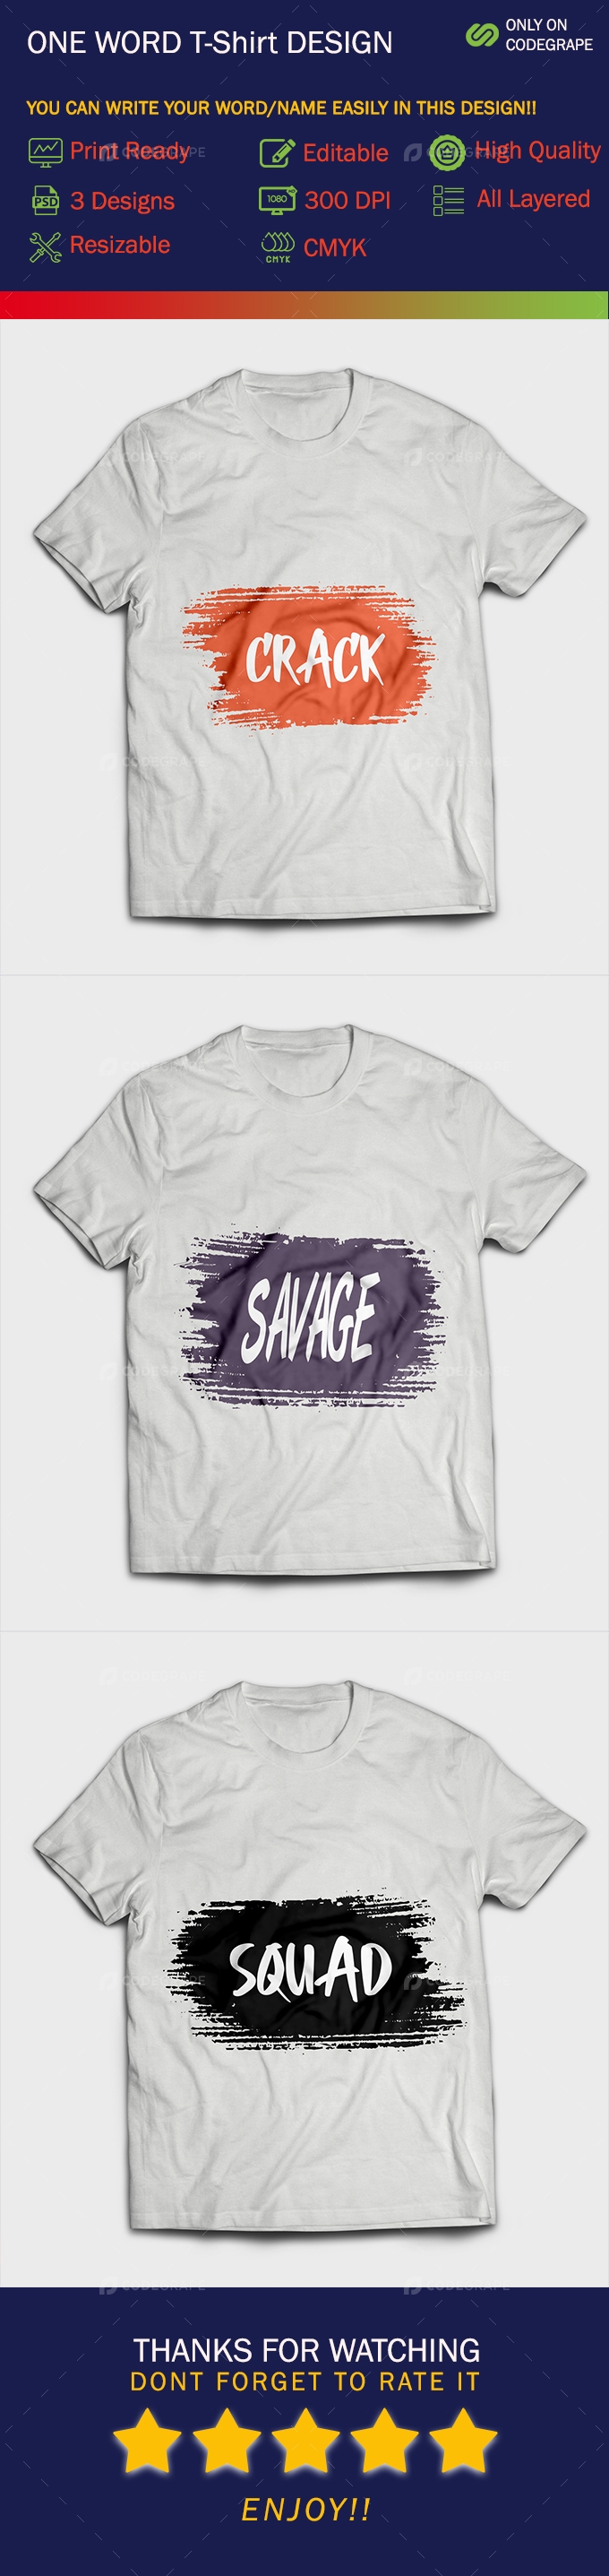 T-Shirt Design (One Word)